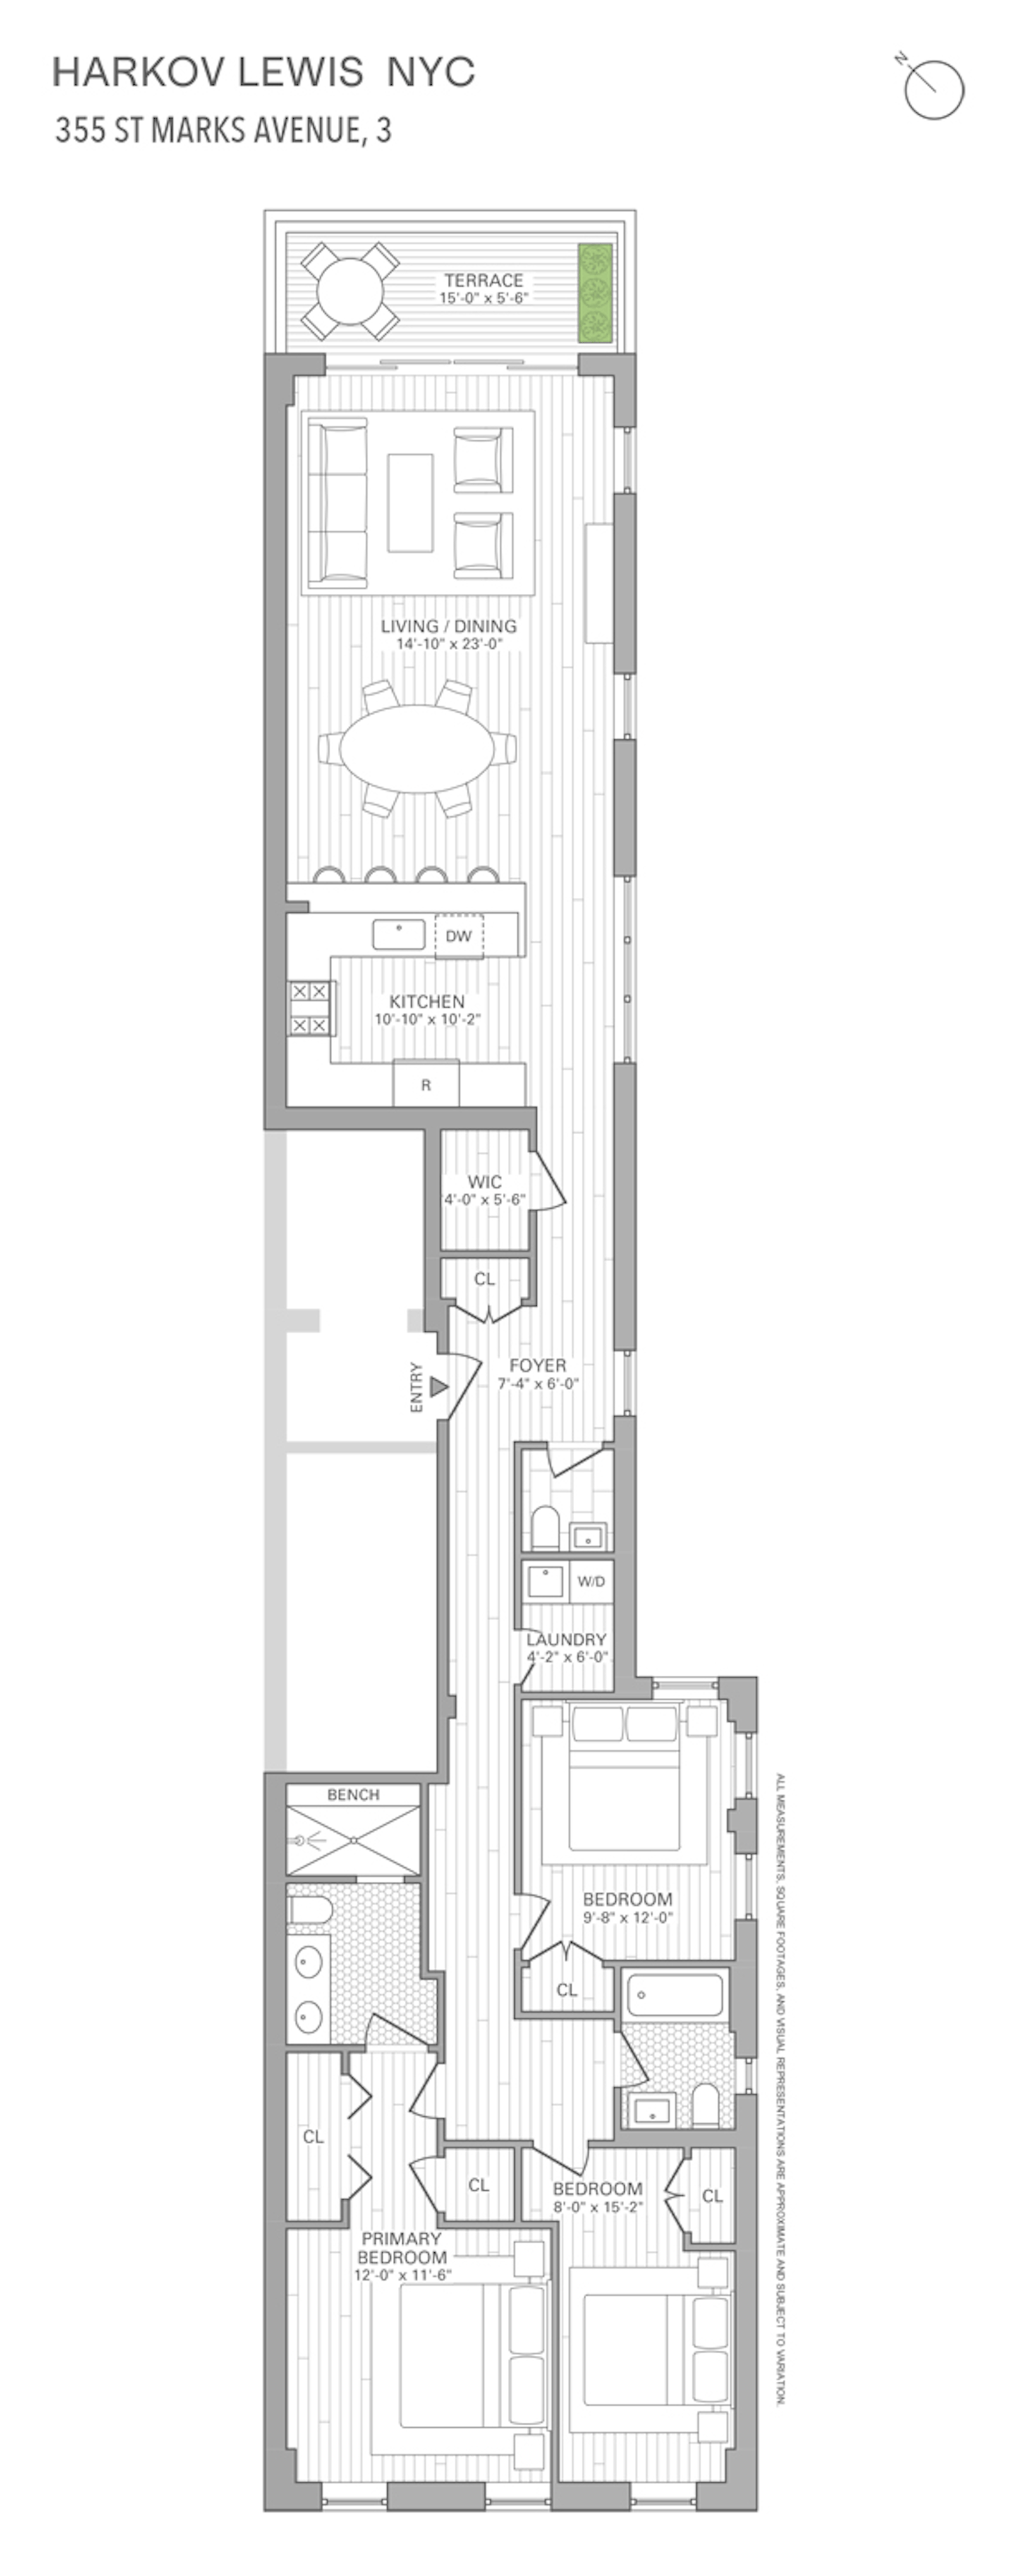 Floorplan for 355 St Marks Avenue, 3